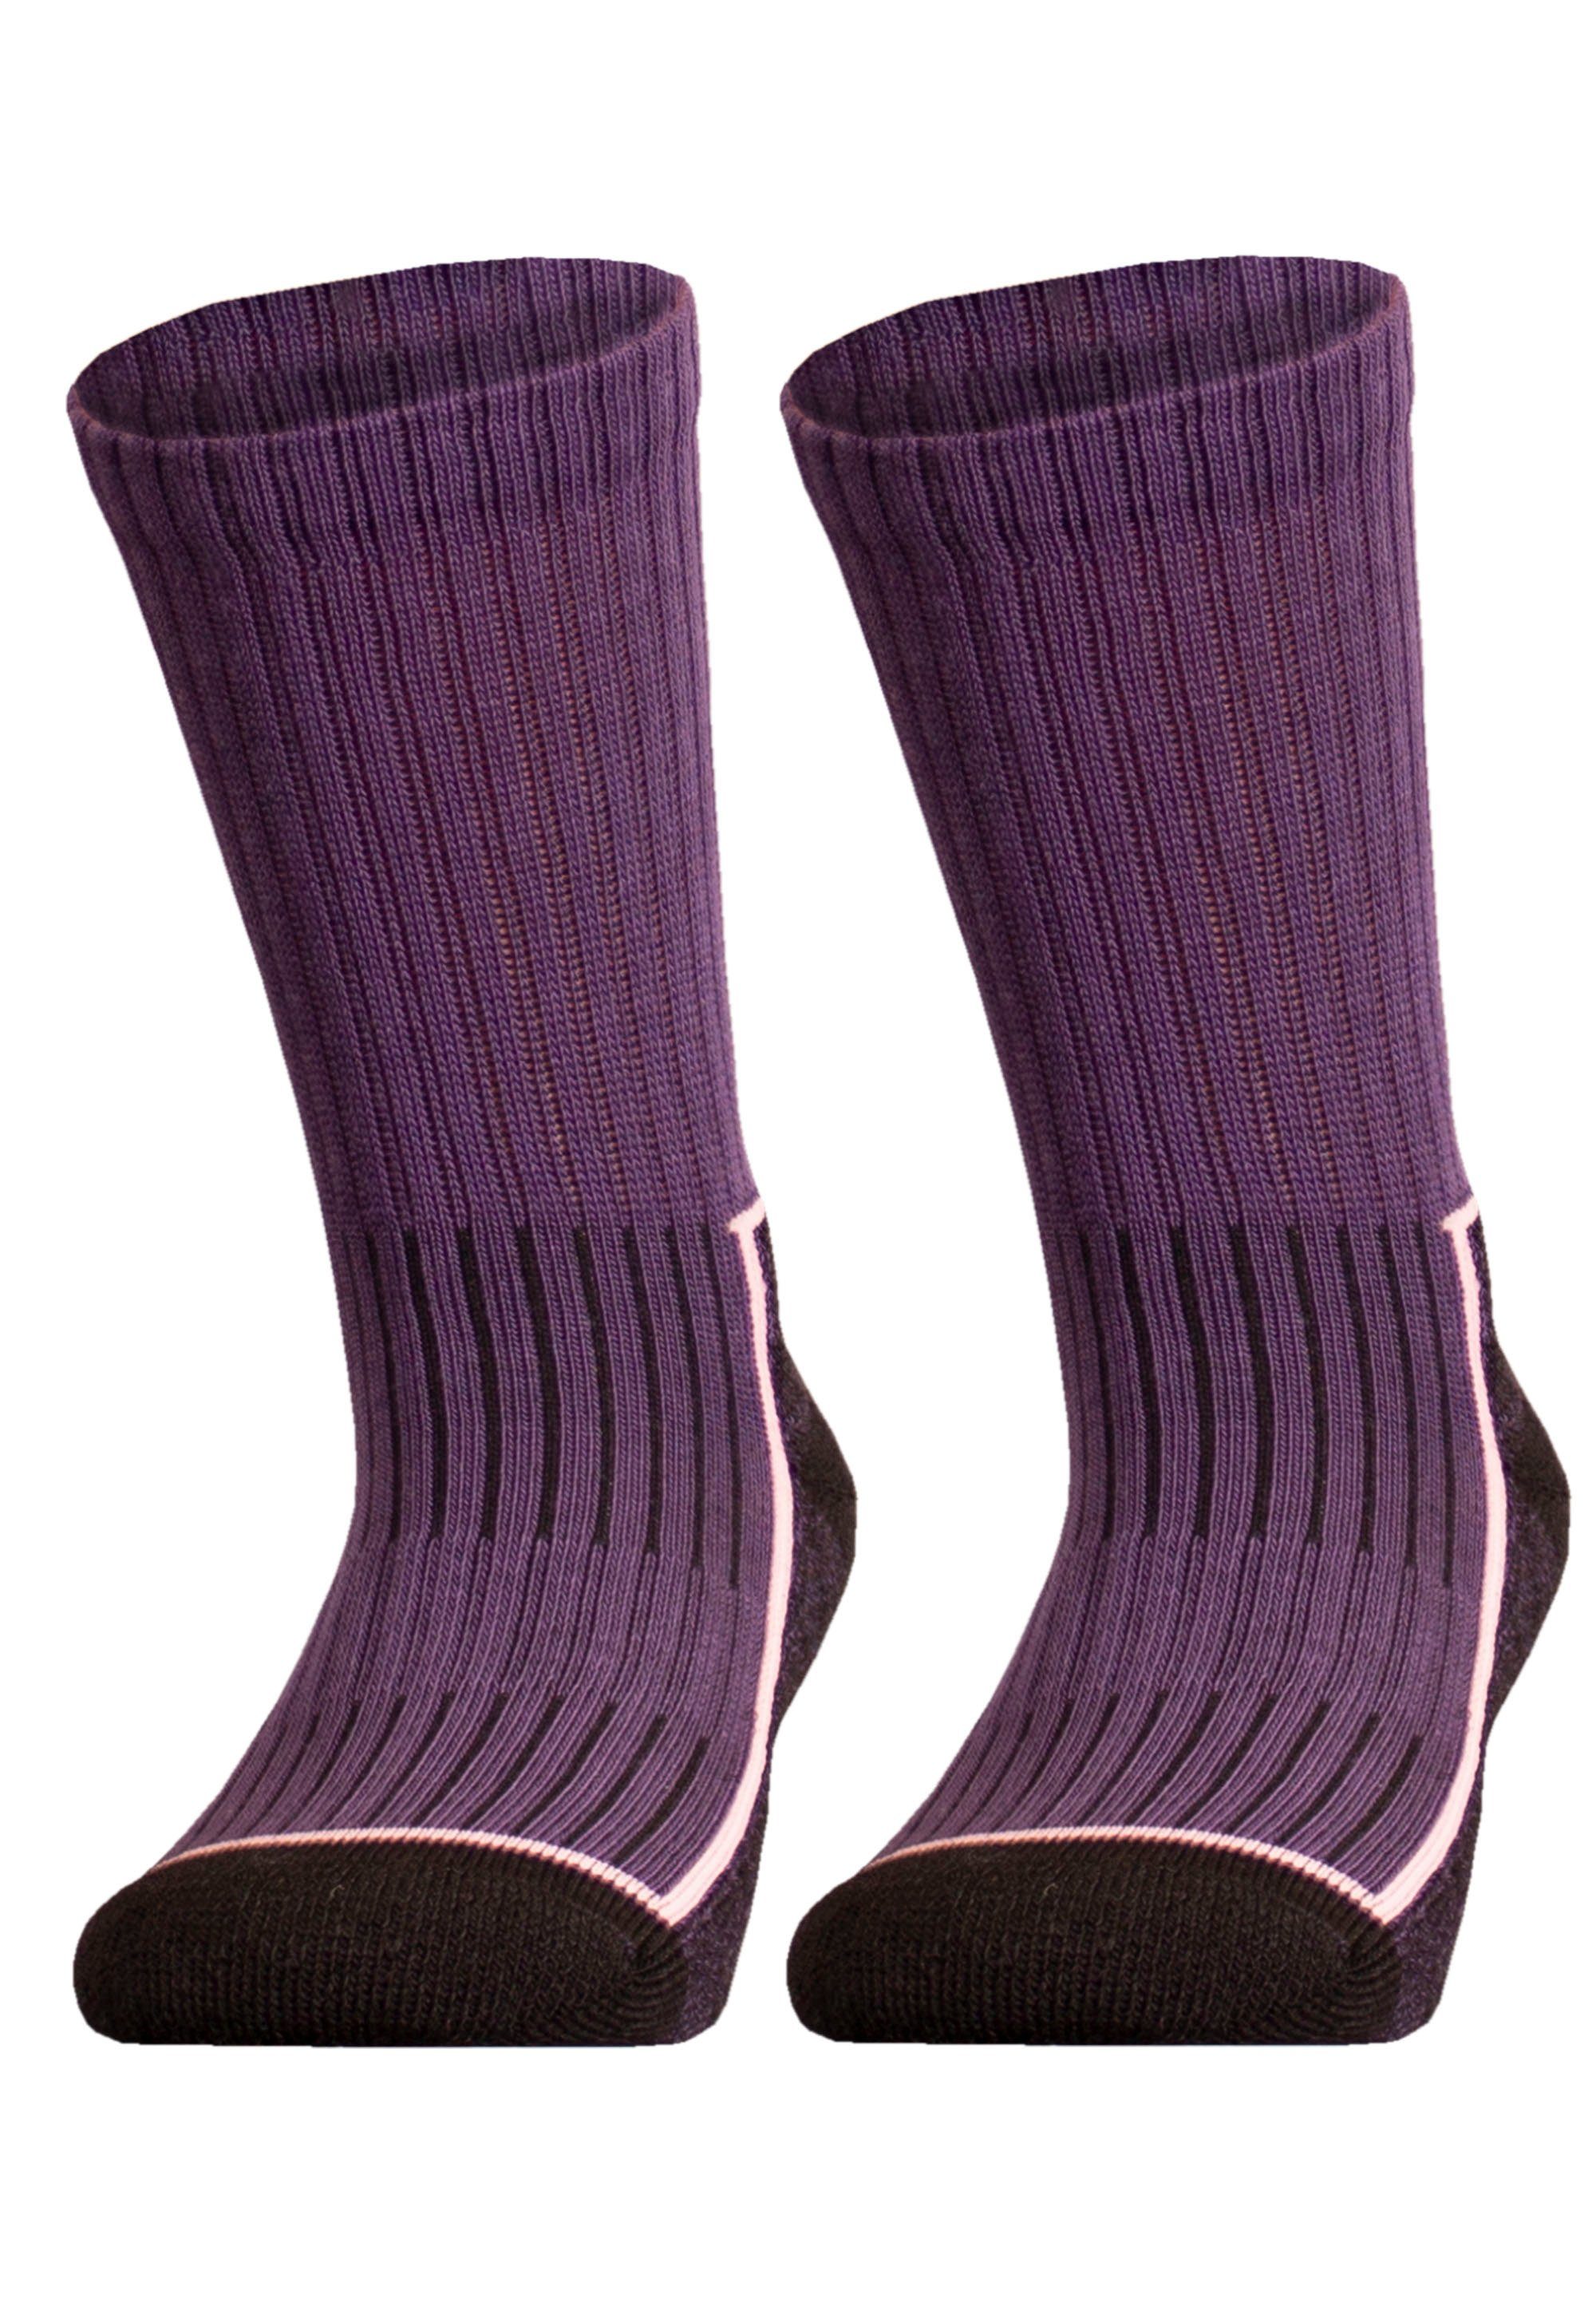 UphillSport Socken SAANA JR 2er Flextech-Struktur lila mit (2-Paar) Pack